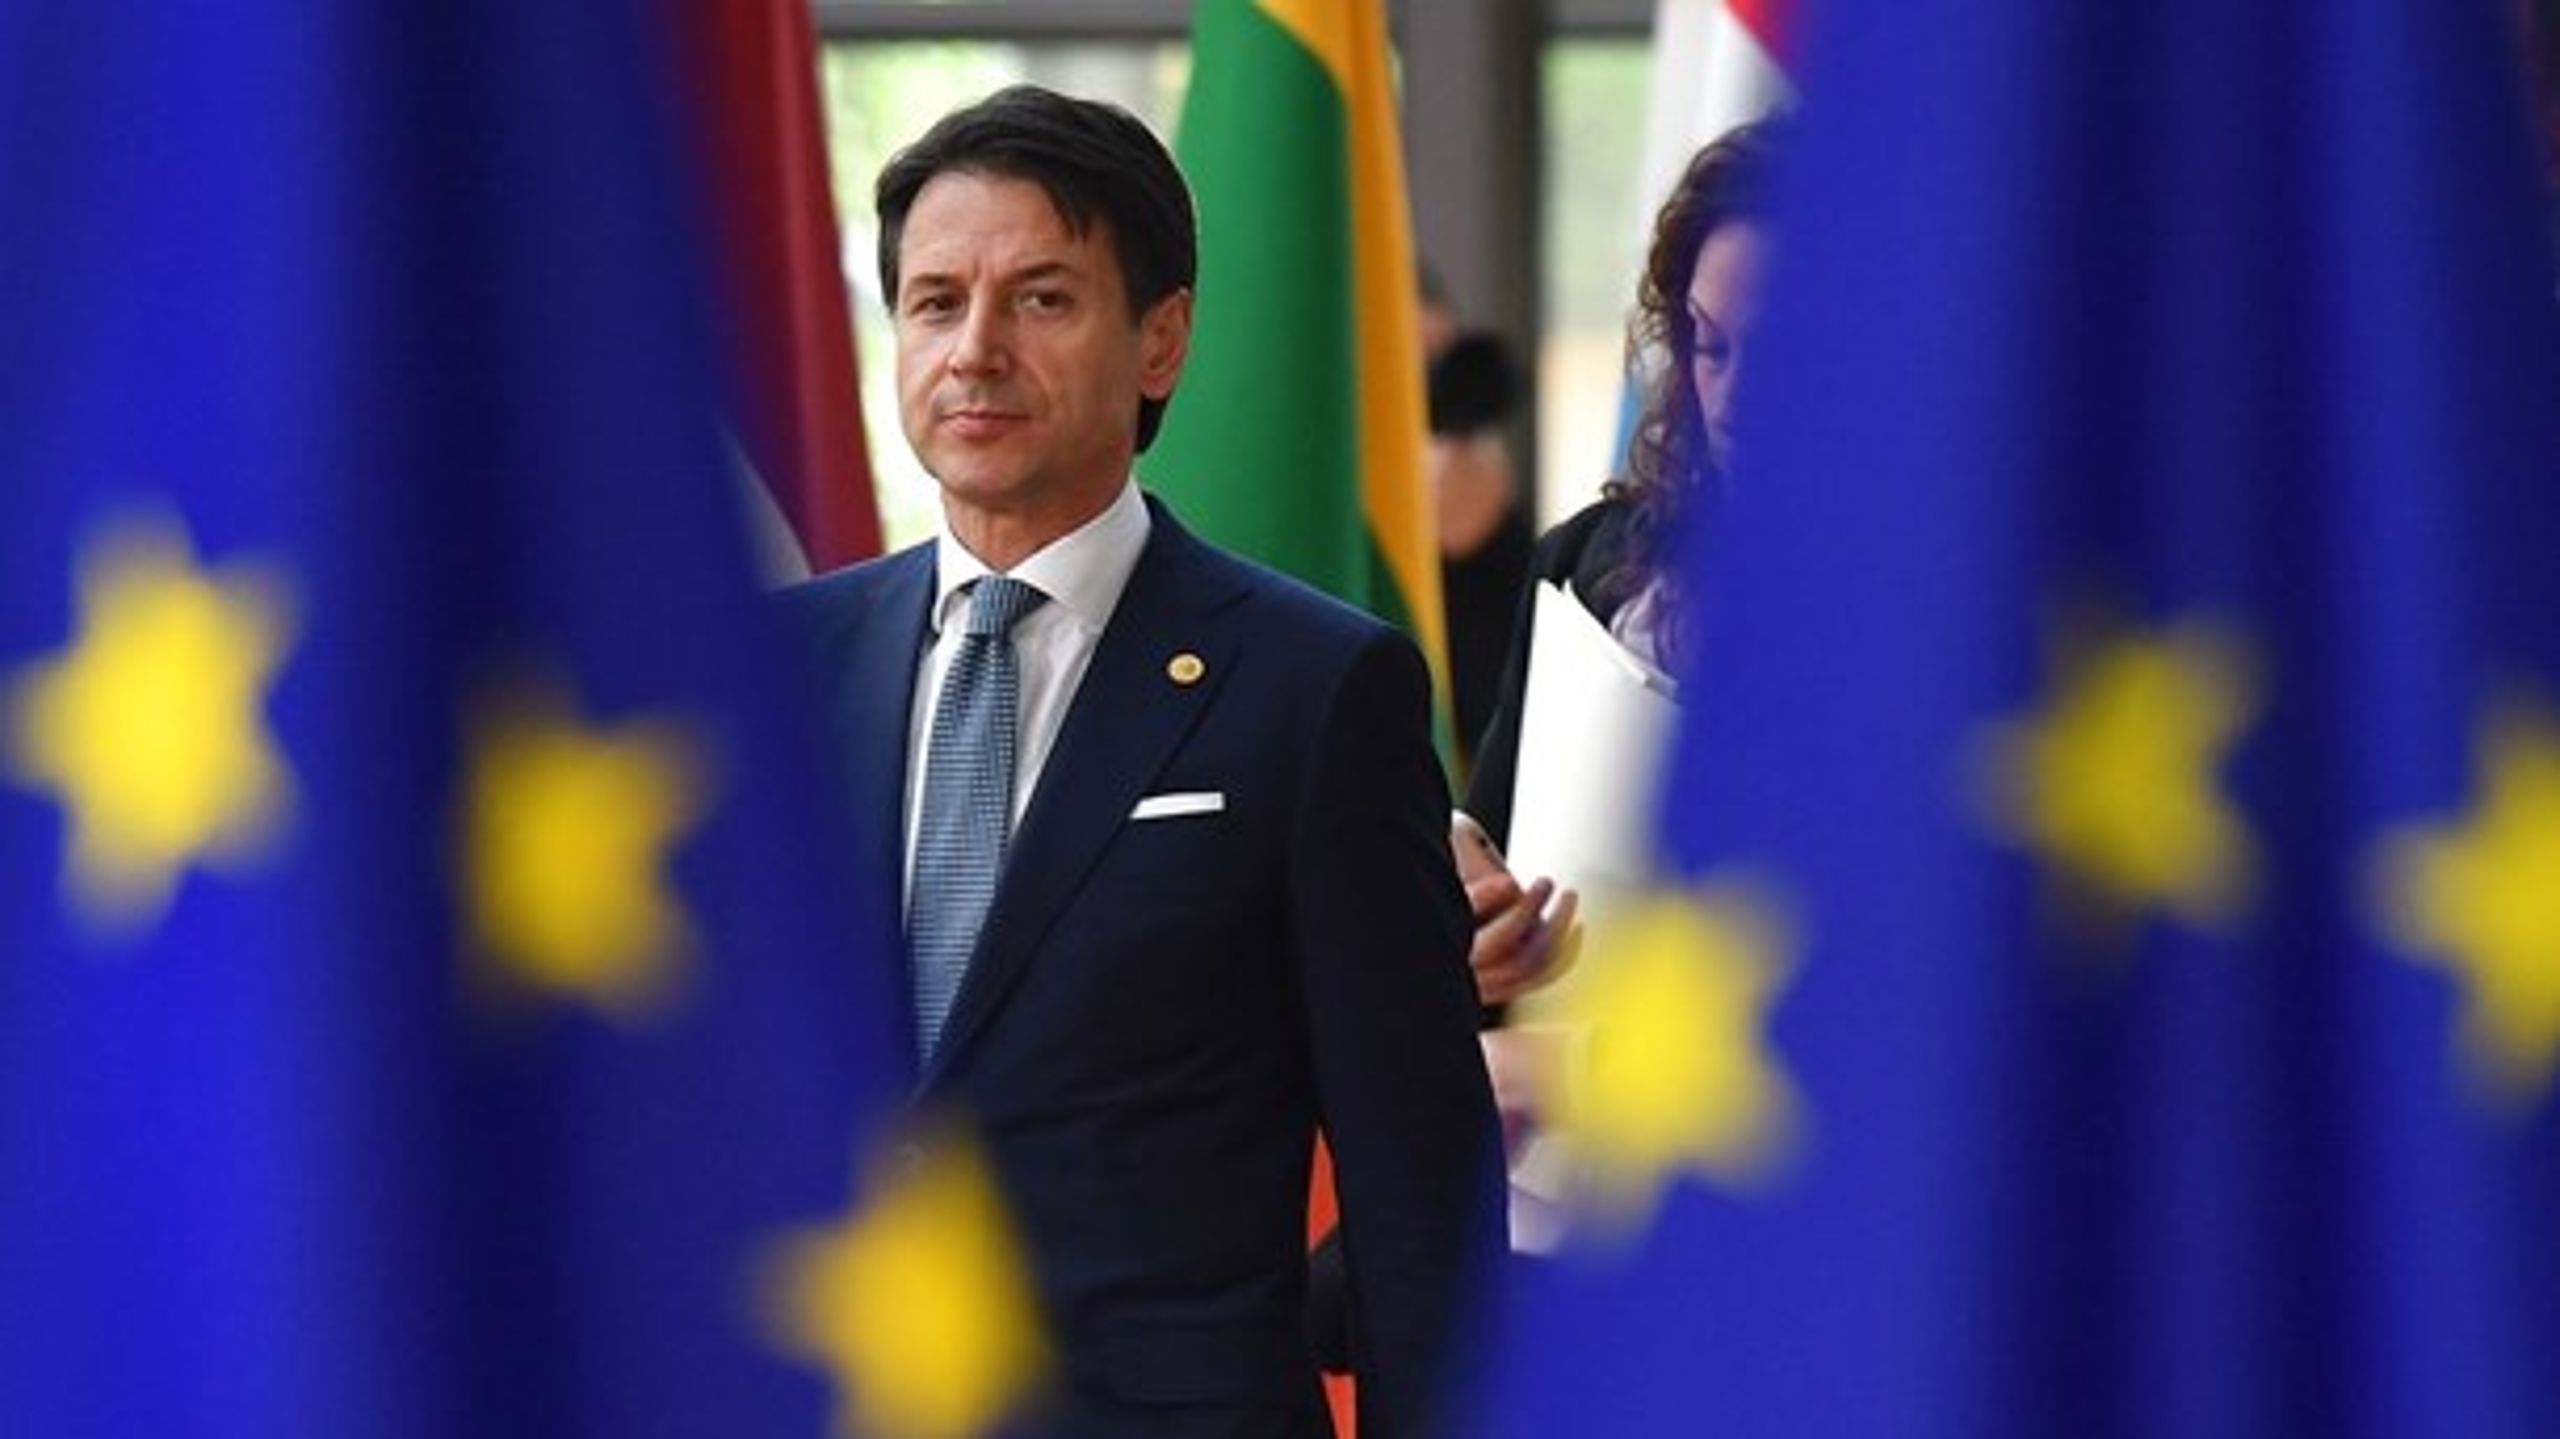 Den nye italienske premierminister, Giuseppe Conte, gjorde sin debut ved et EU-topmøde til et gidseldrama ved at blokere for alle beslutninger.